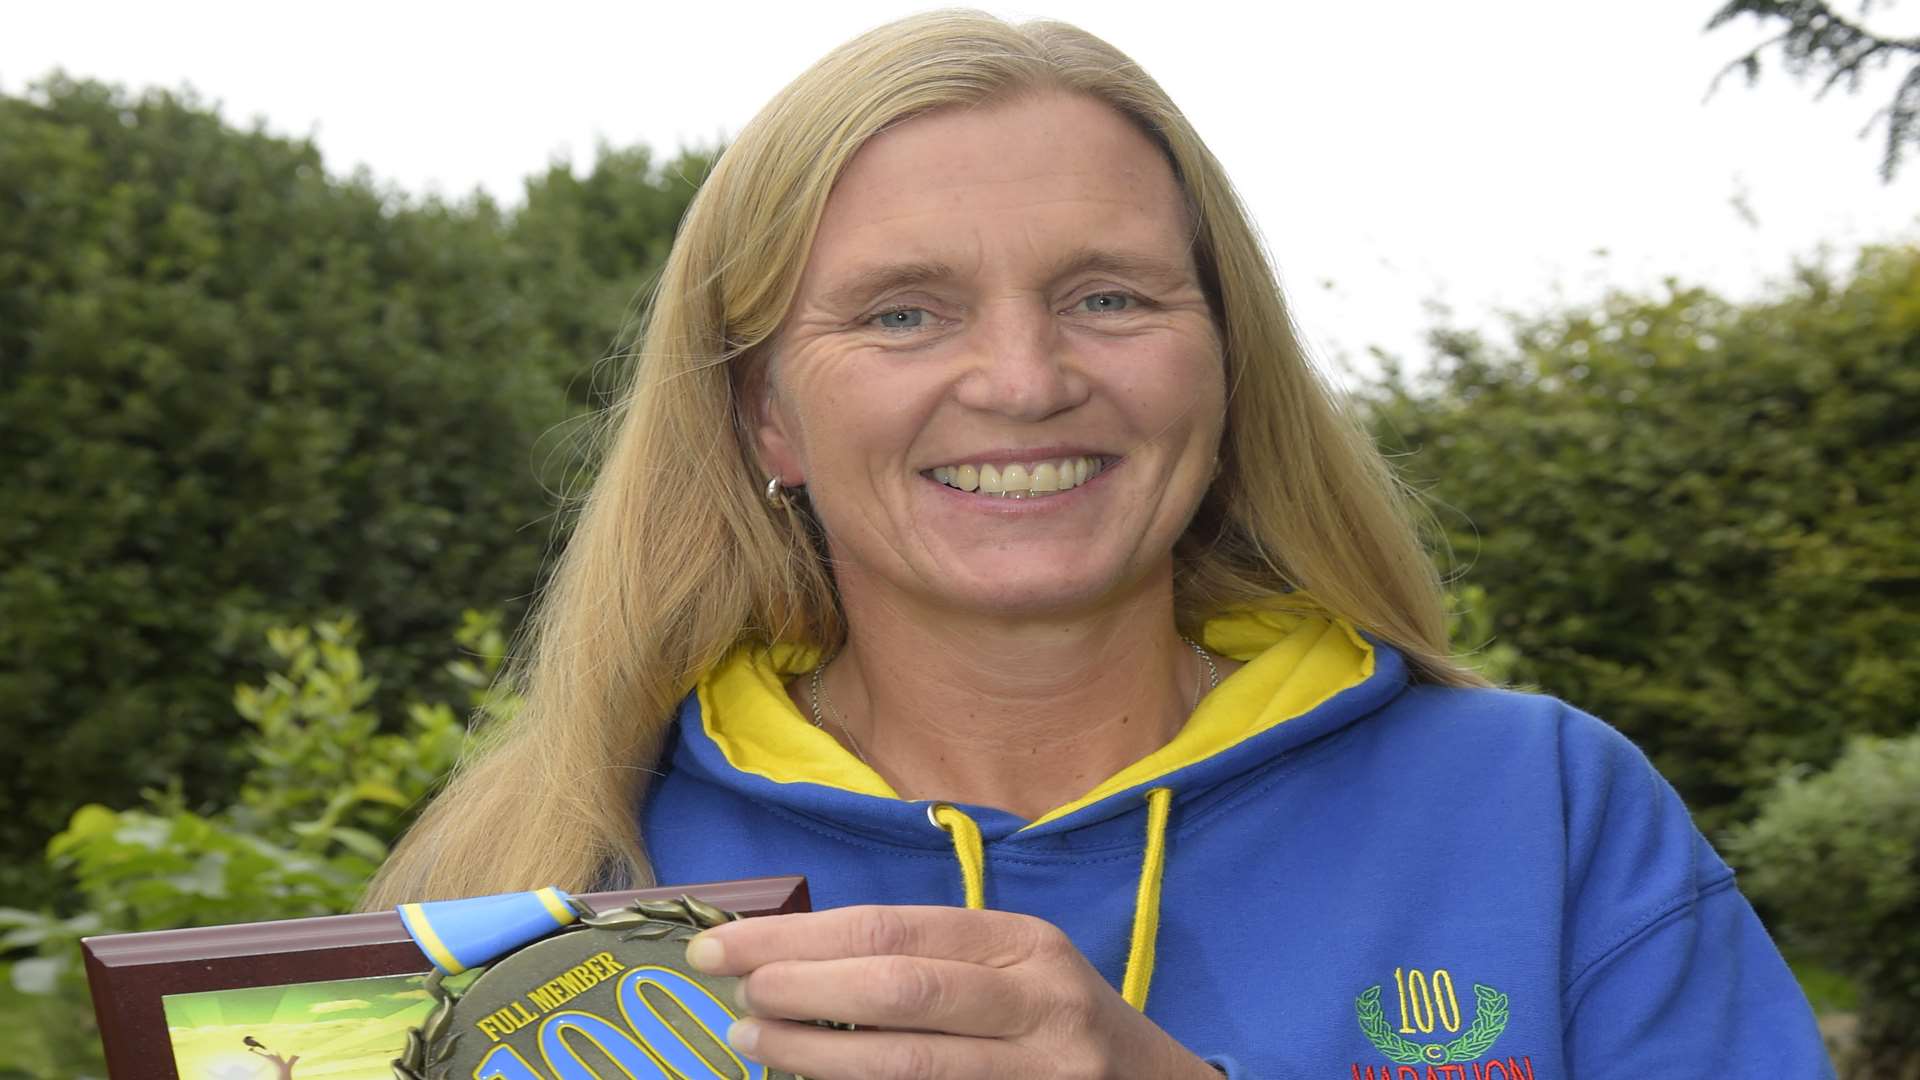 Mum of ten children, Debbie Sterling, has completed 100 marathons